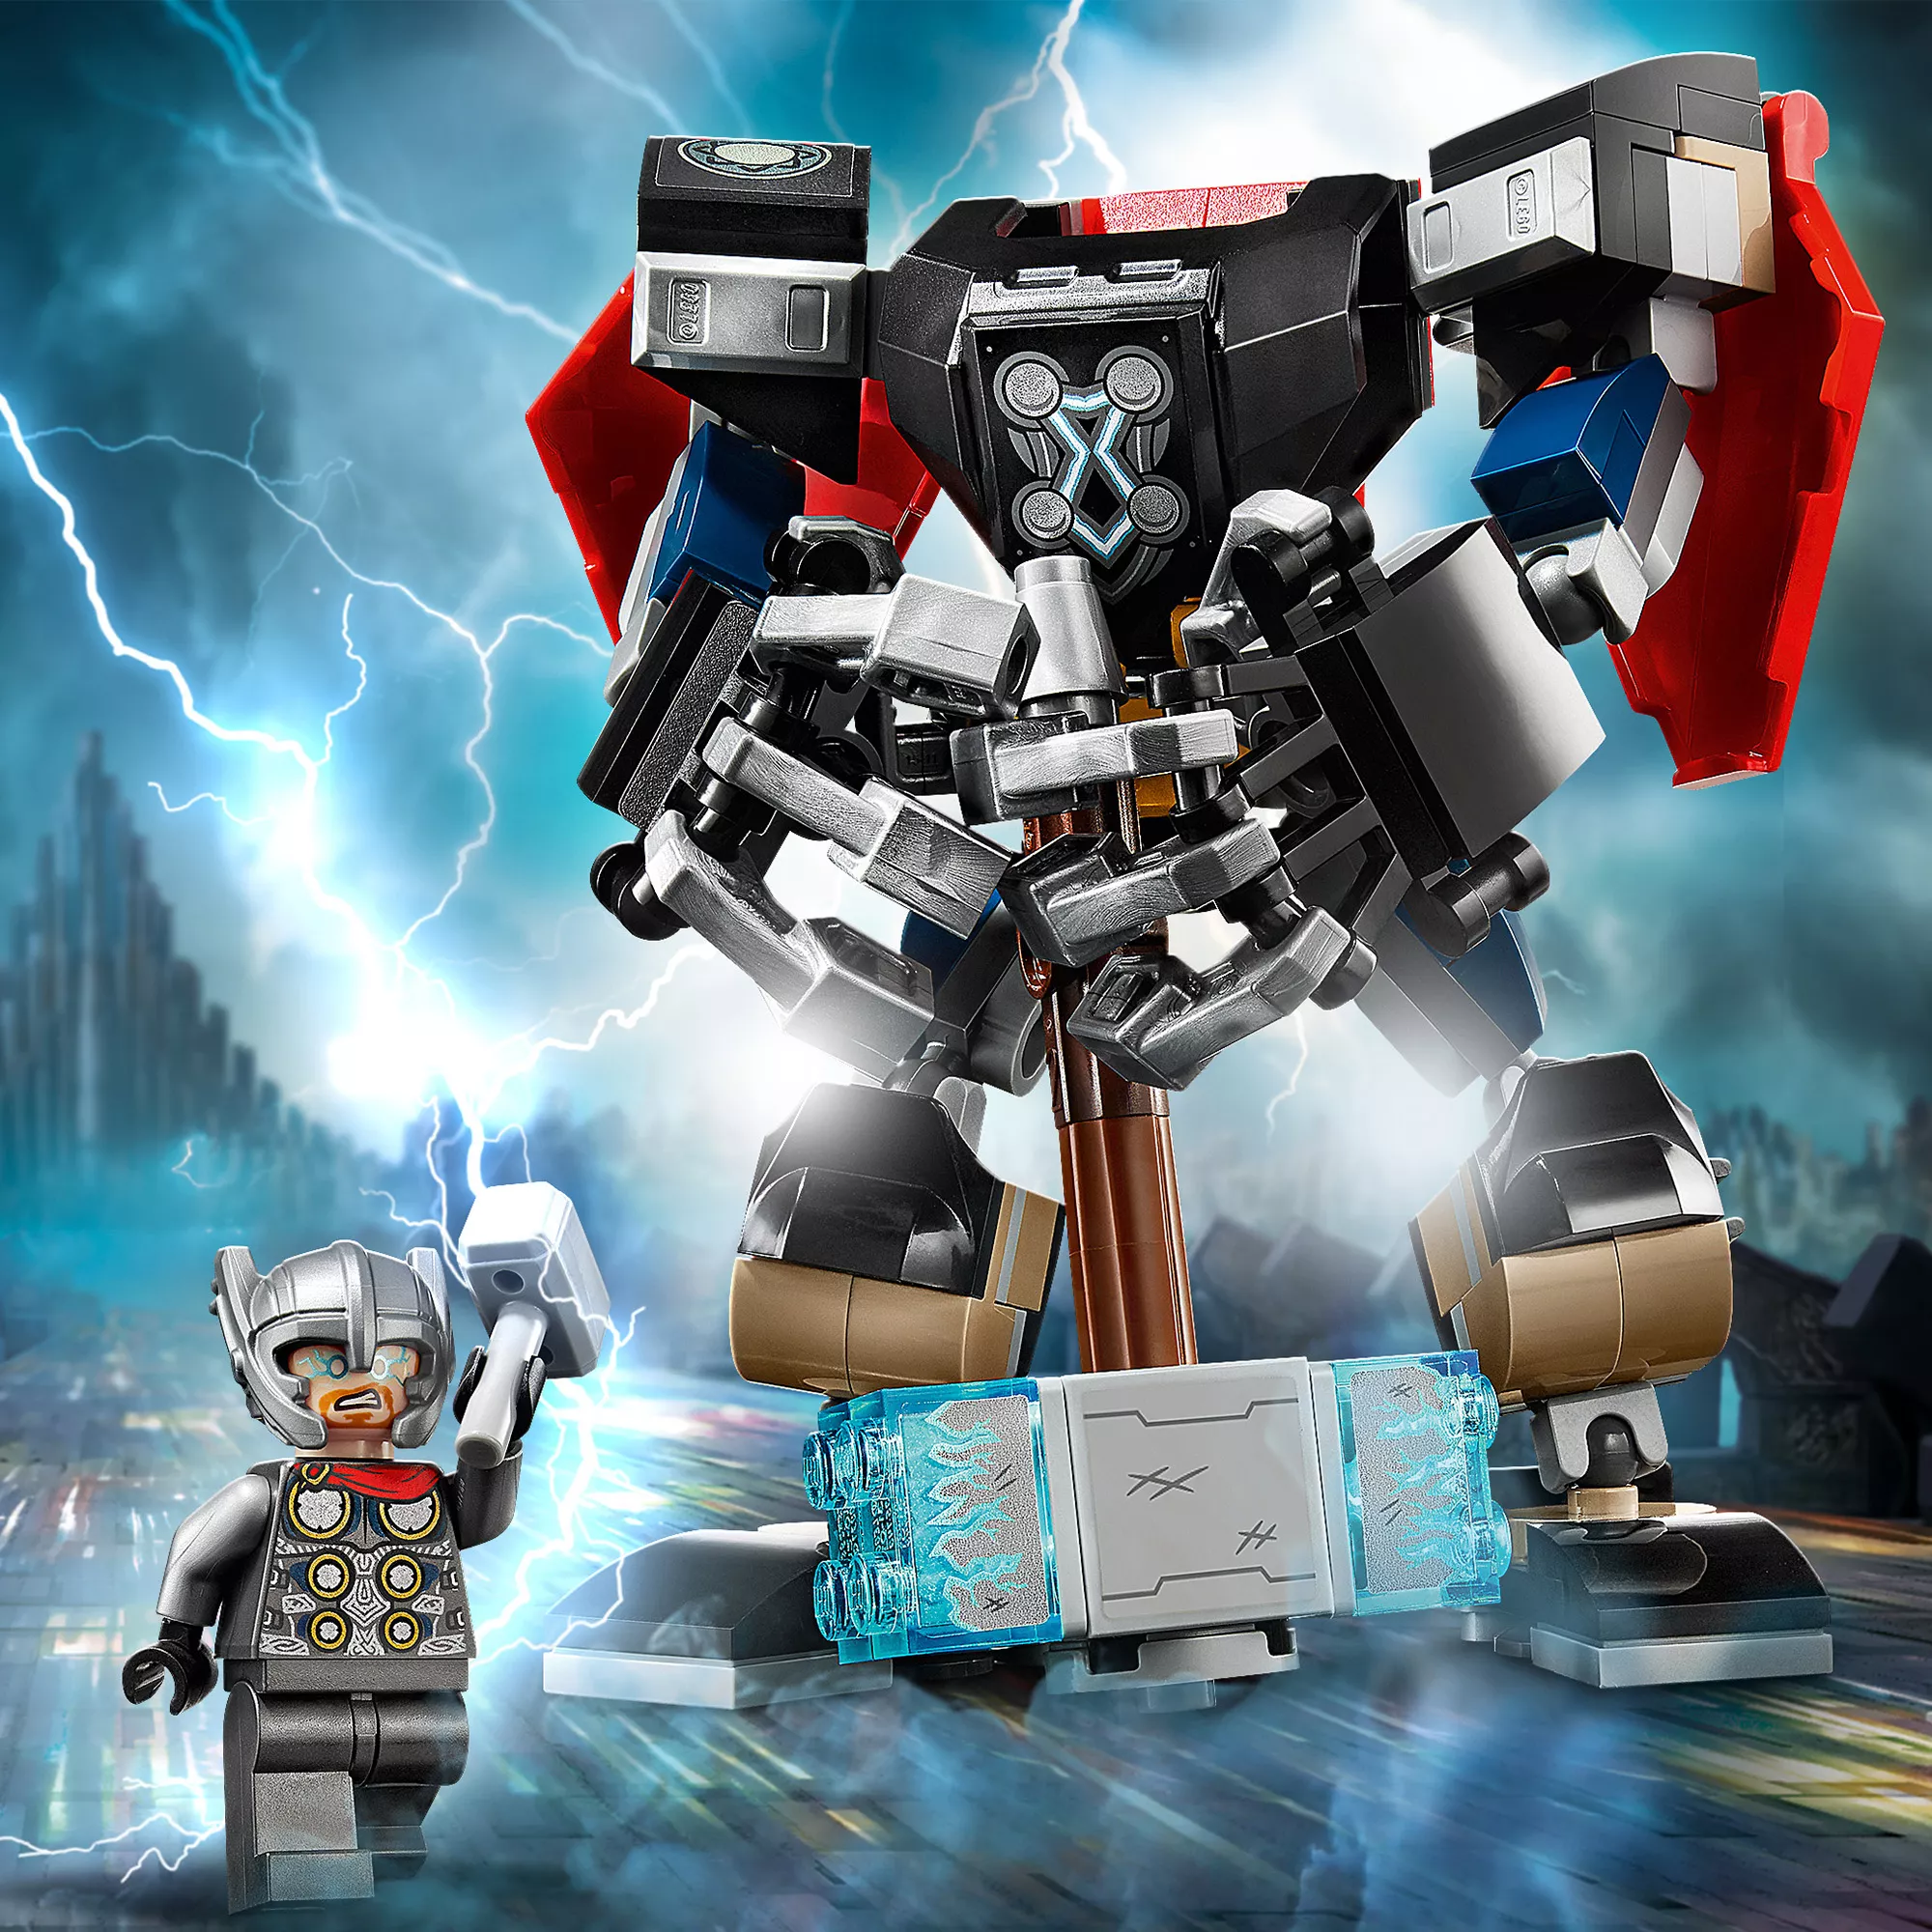 LEGO Marvel Super Heroes Thor Mech